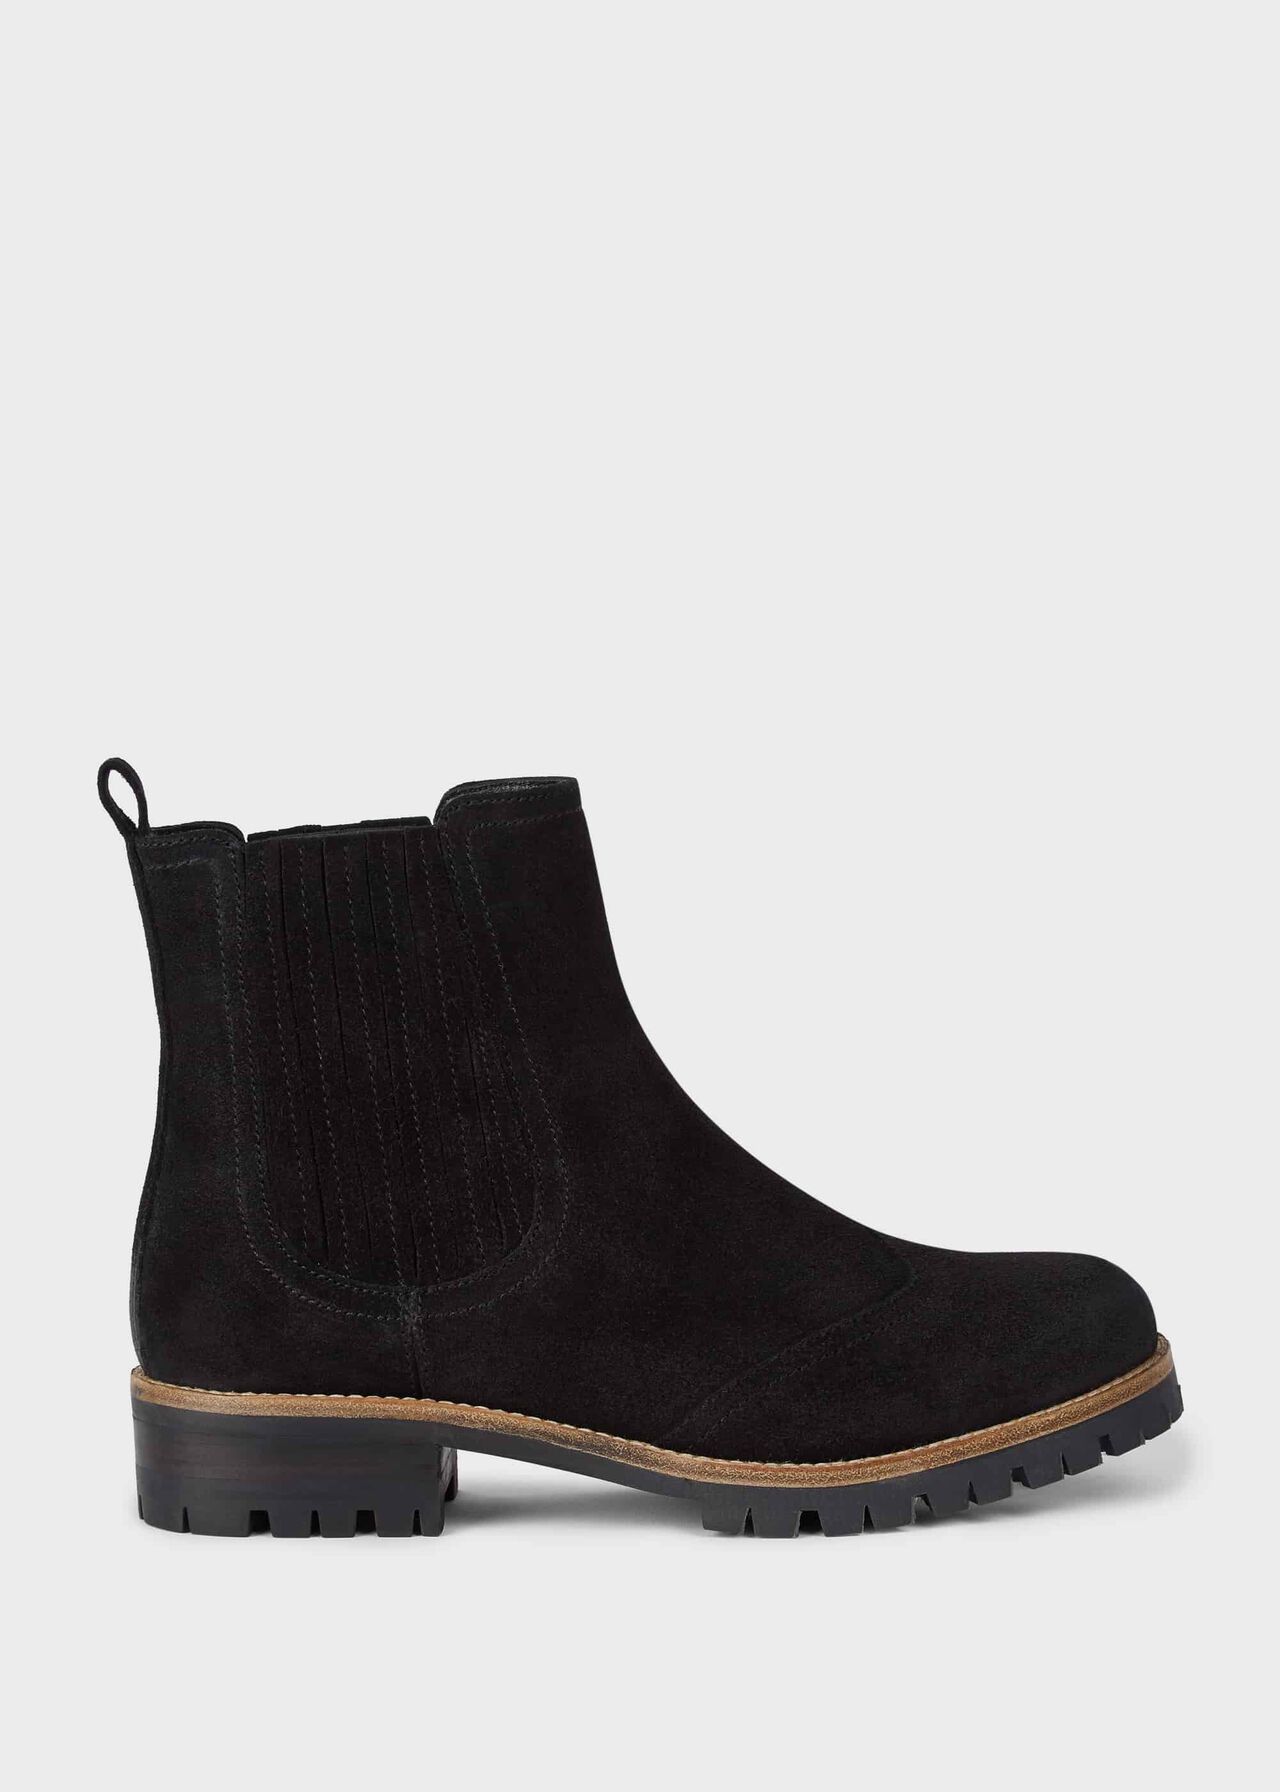 Beatrix Ankle Boots, Black, hi-res